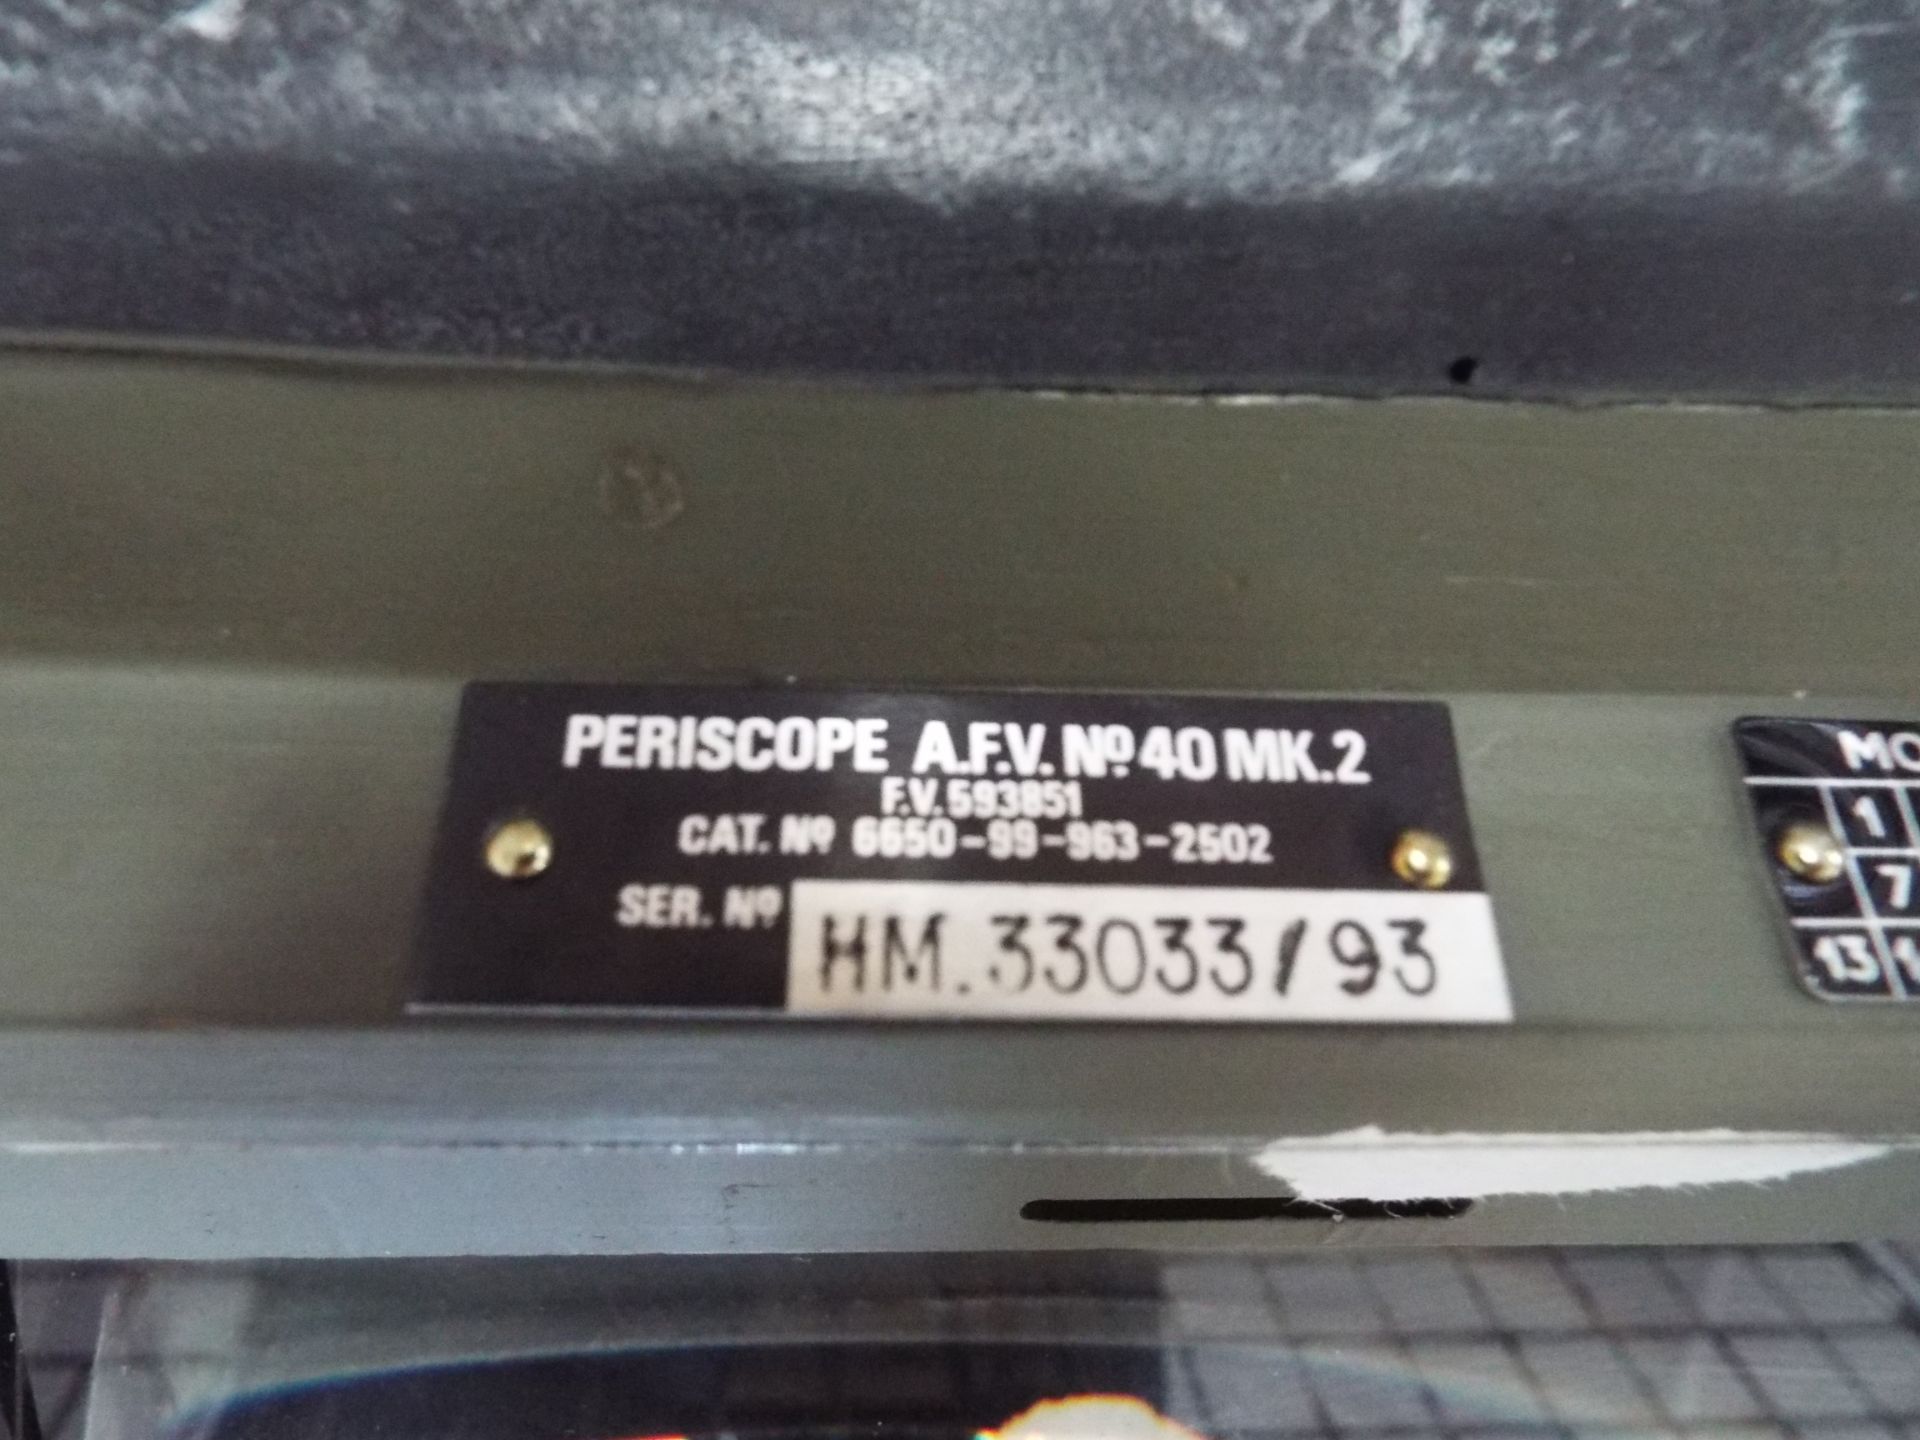 16 x CHIEFTAIN No.40 Mk 2 Periscopes - Bild 4 aus 7